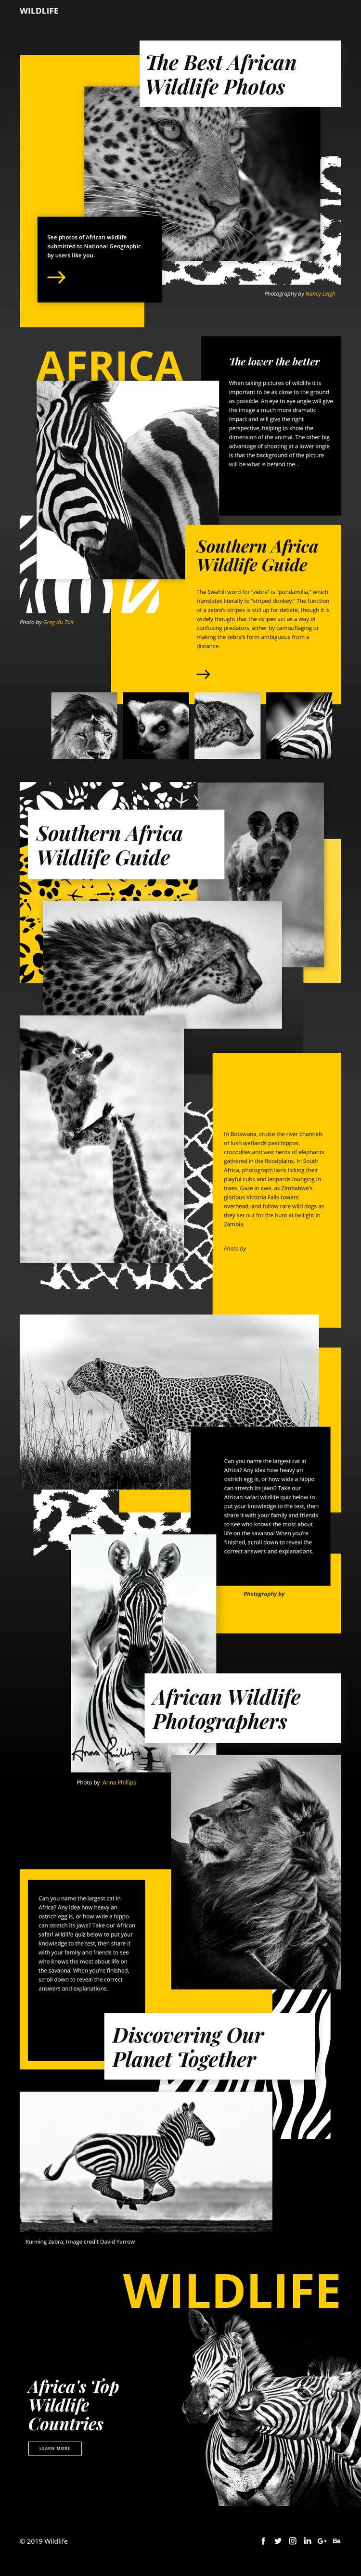 Wildlife Photos Web Design